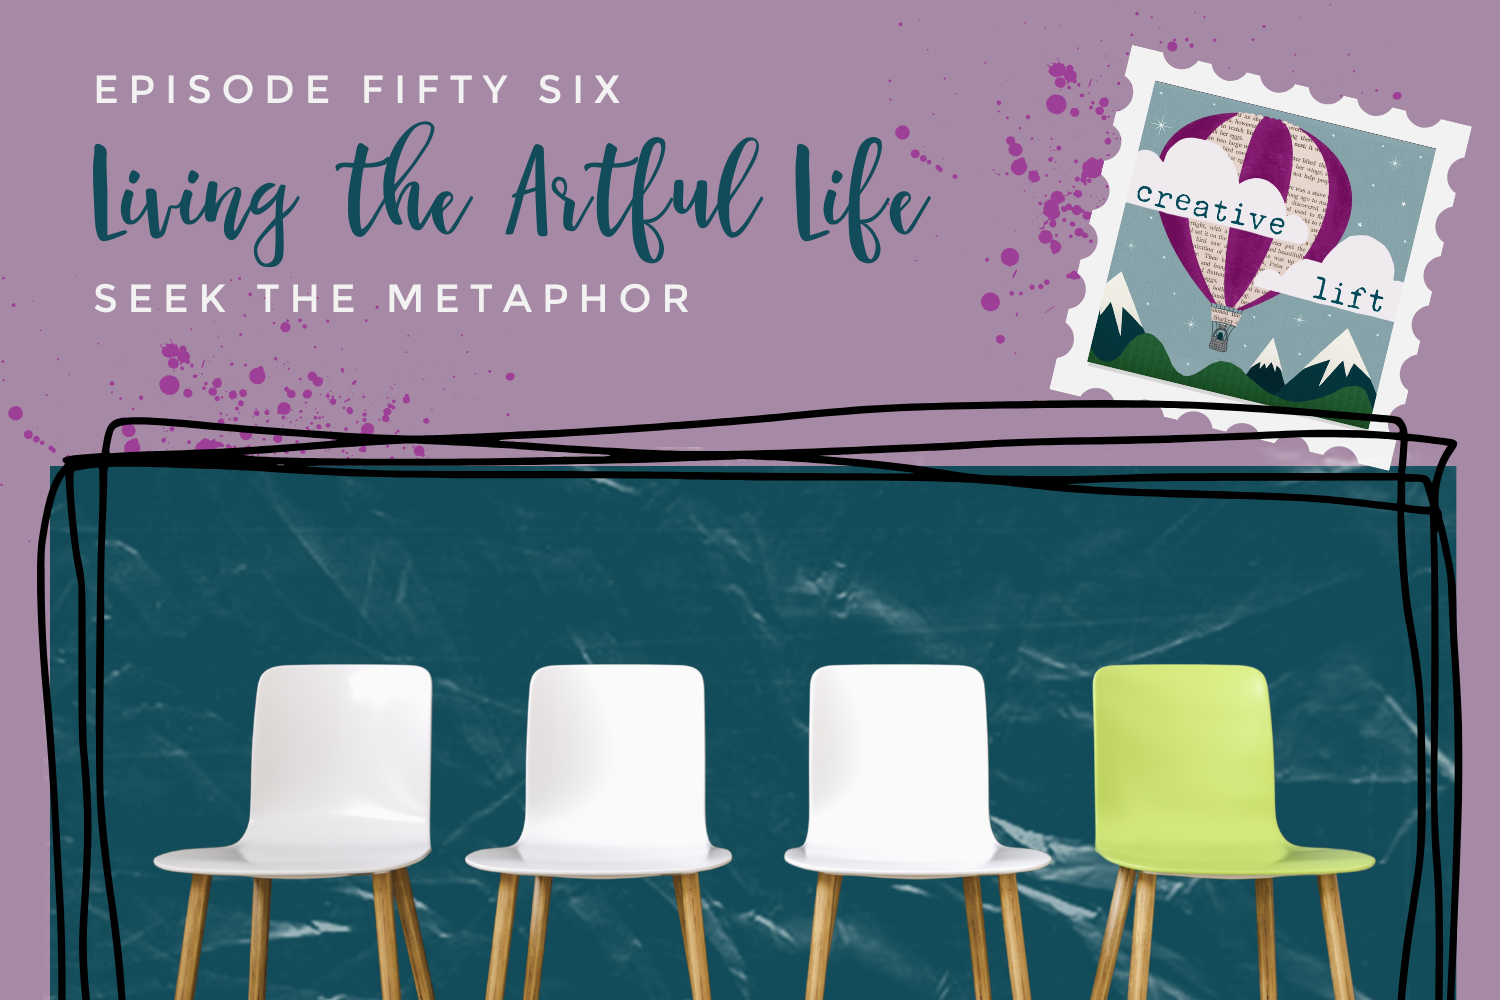 Creative Lift Episode 56- Living the Artful Life: Seek the Metaphor